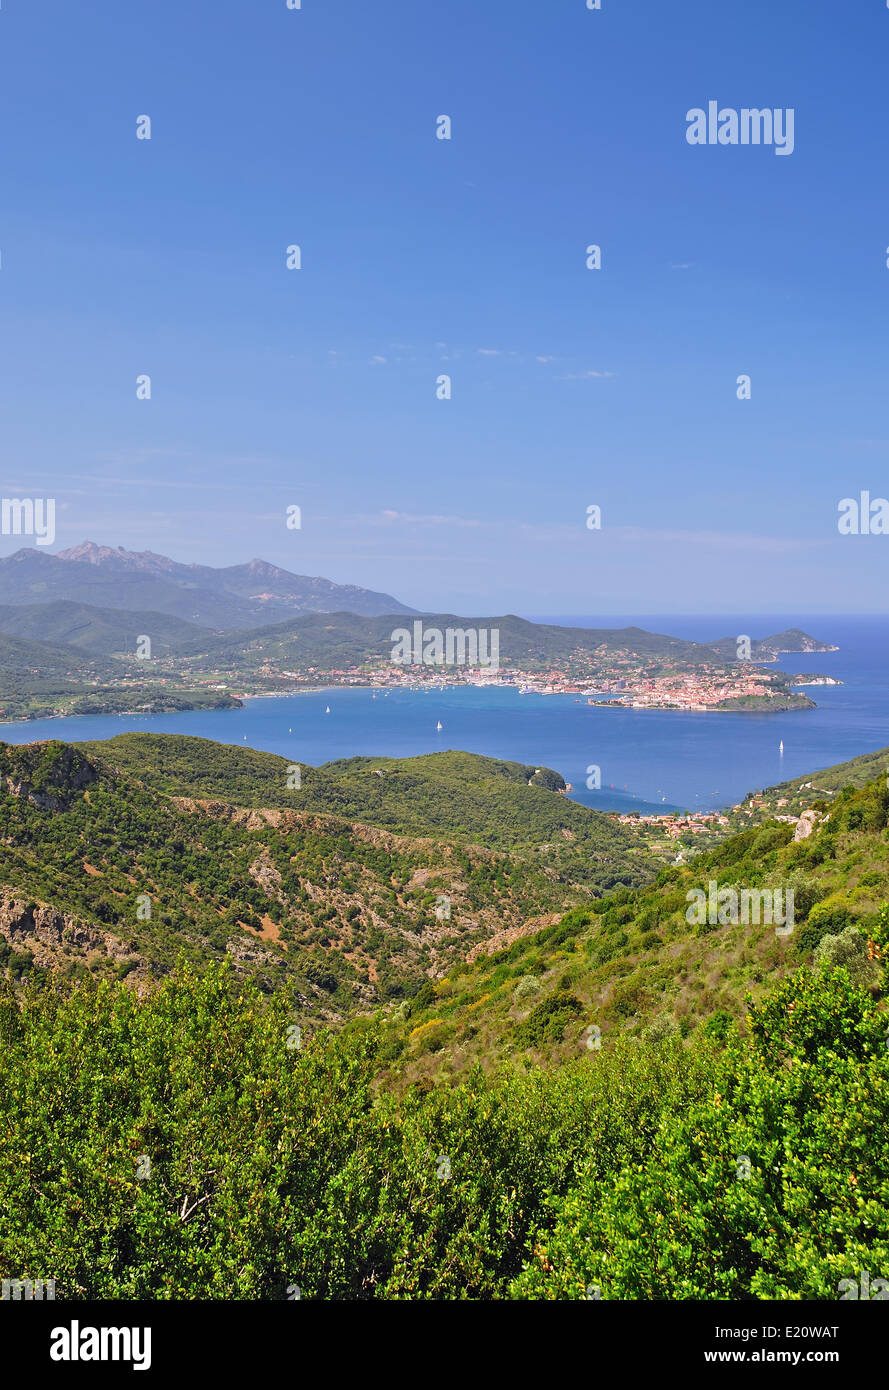 La bahía de Portoferraio en la Isla de Elba Foto de stock